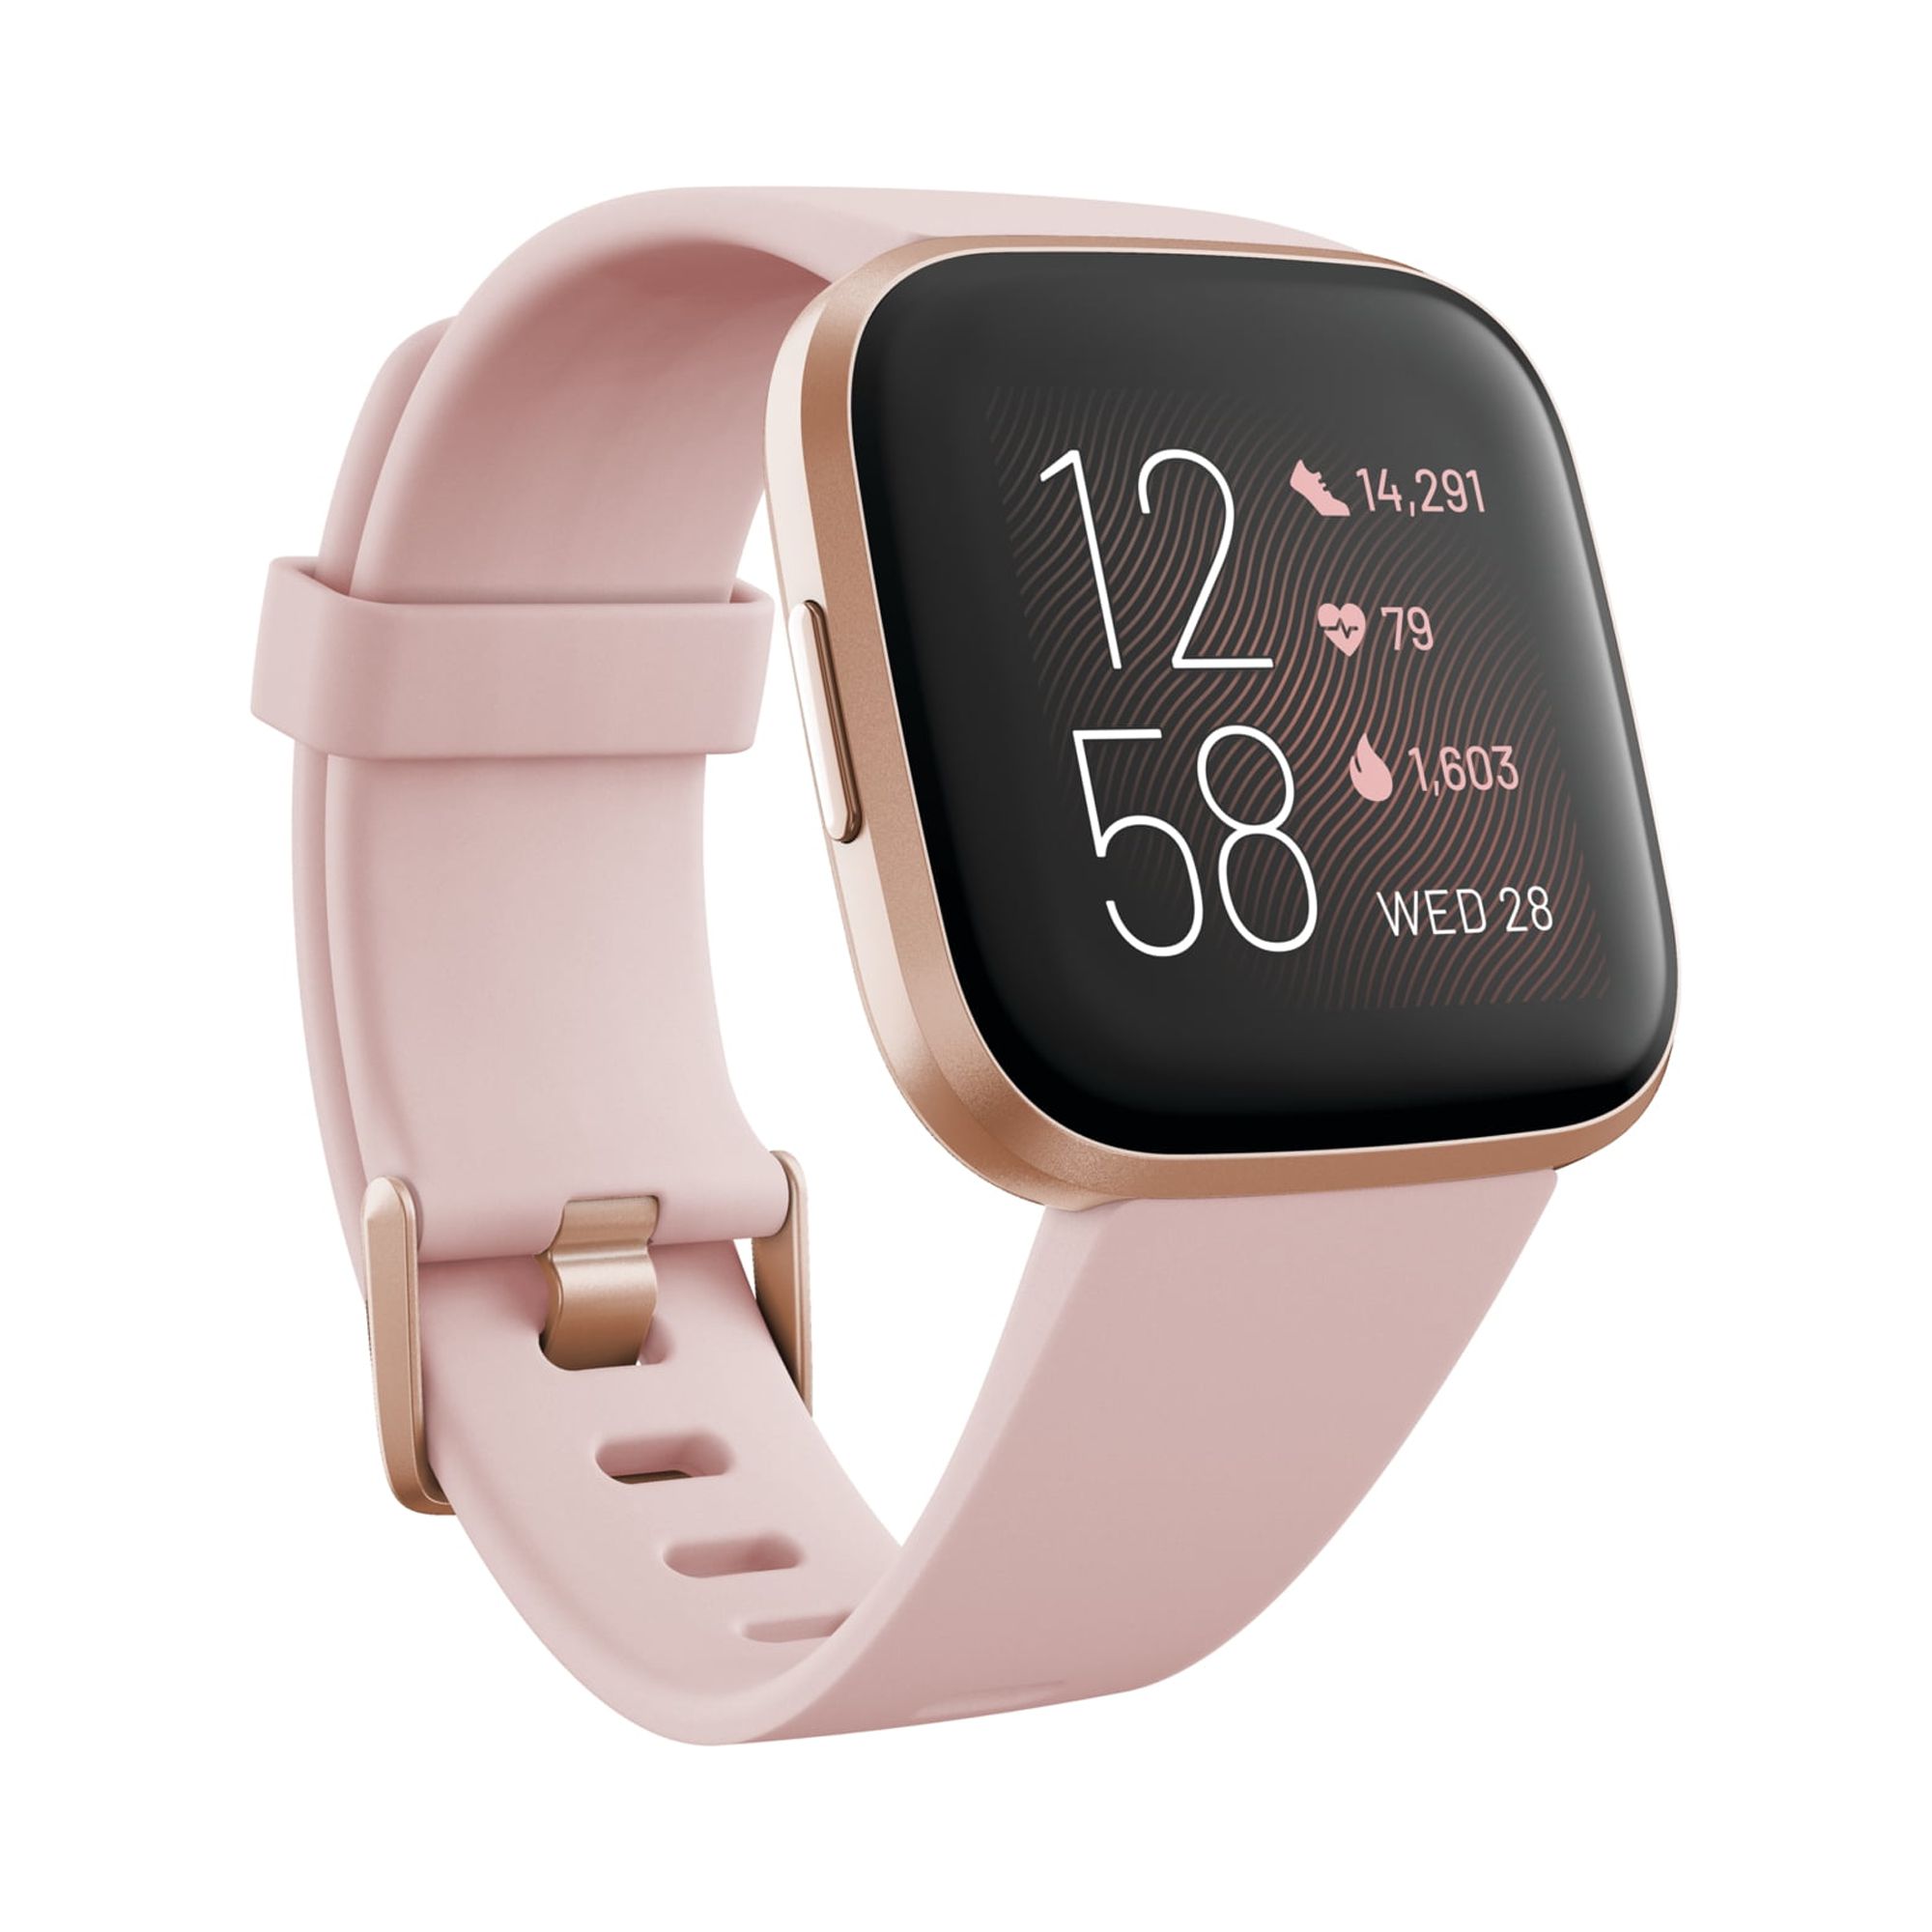 Fitbit Versa 2 Health & Fitness Smartwatch - Petal /Copper Rose Aluminum - image 1 of 11